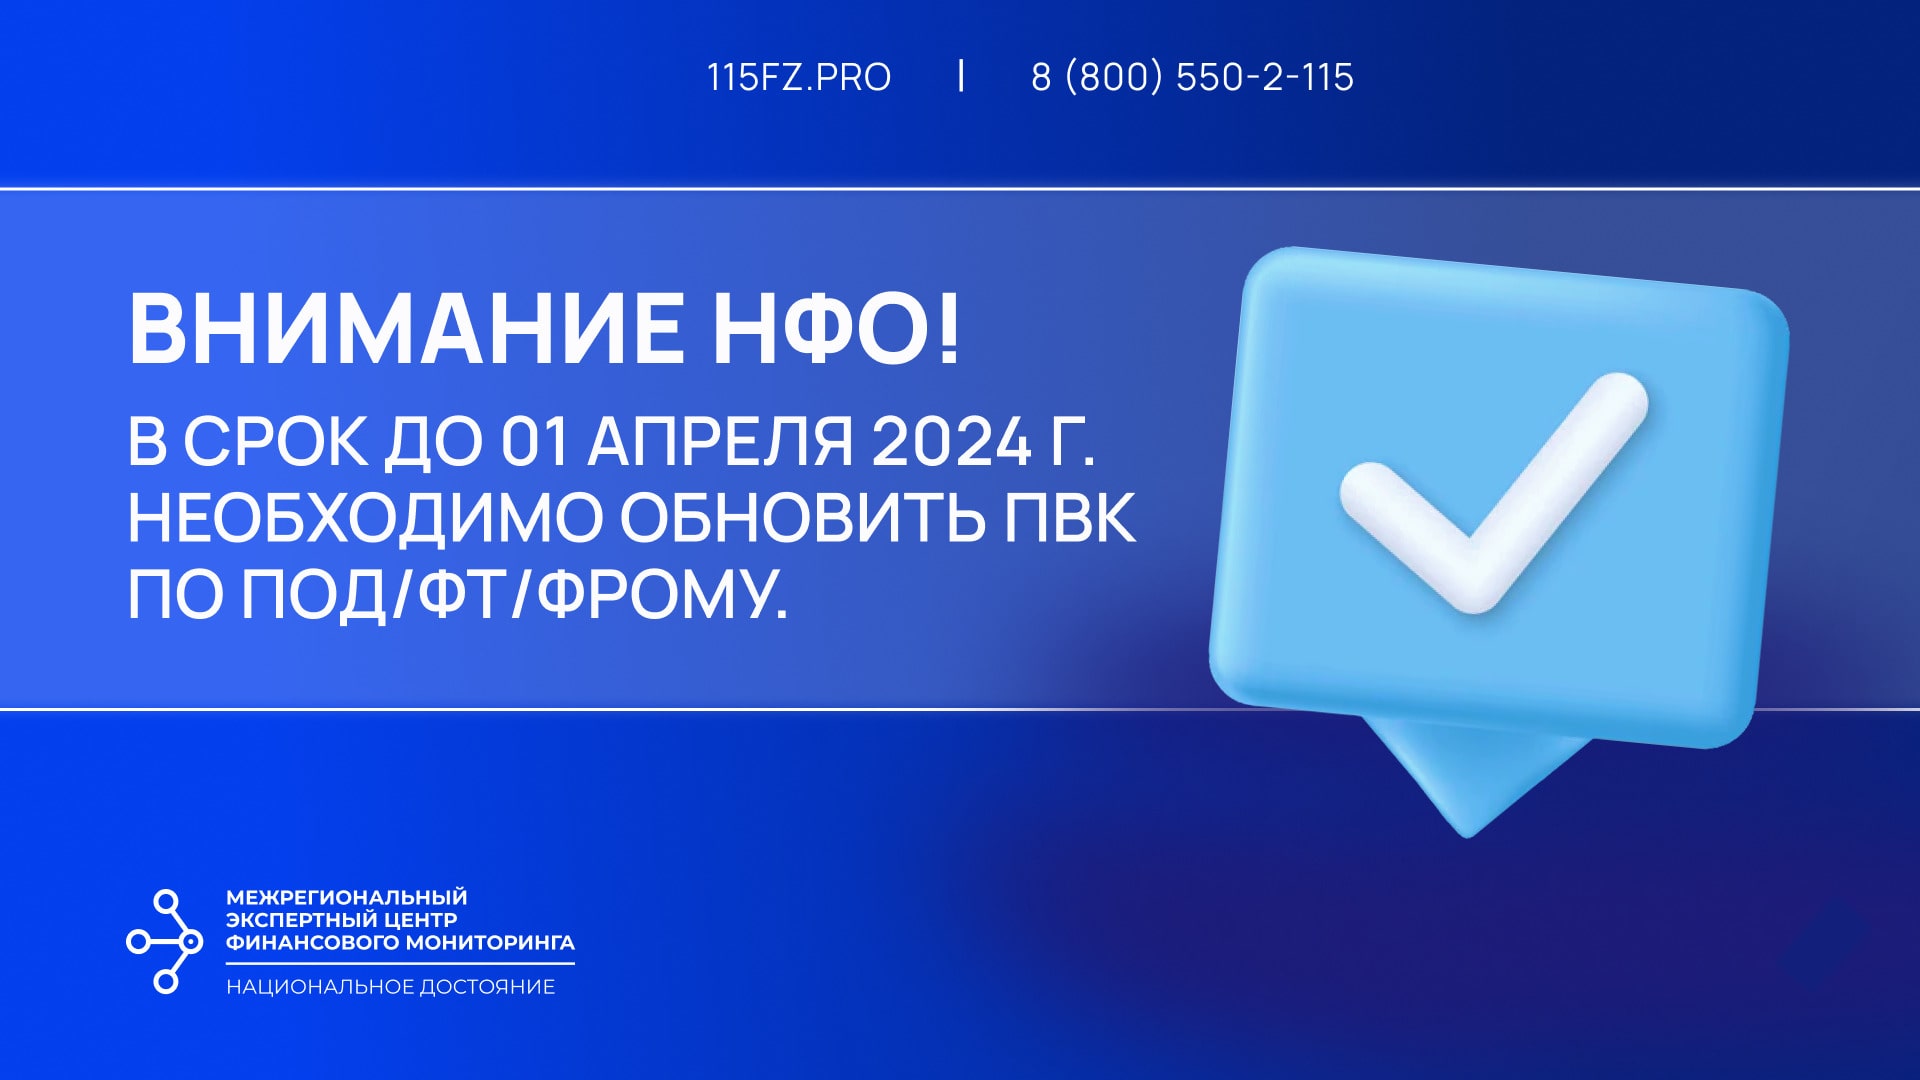 В срок до 01 апреля 2024 года НФО необходимо обновить ПВК в целях ПОД/ФТ/ФРОМУ